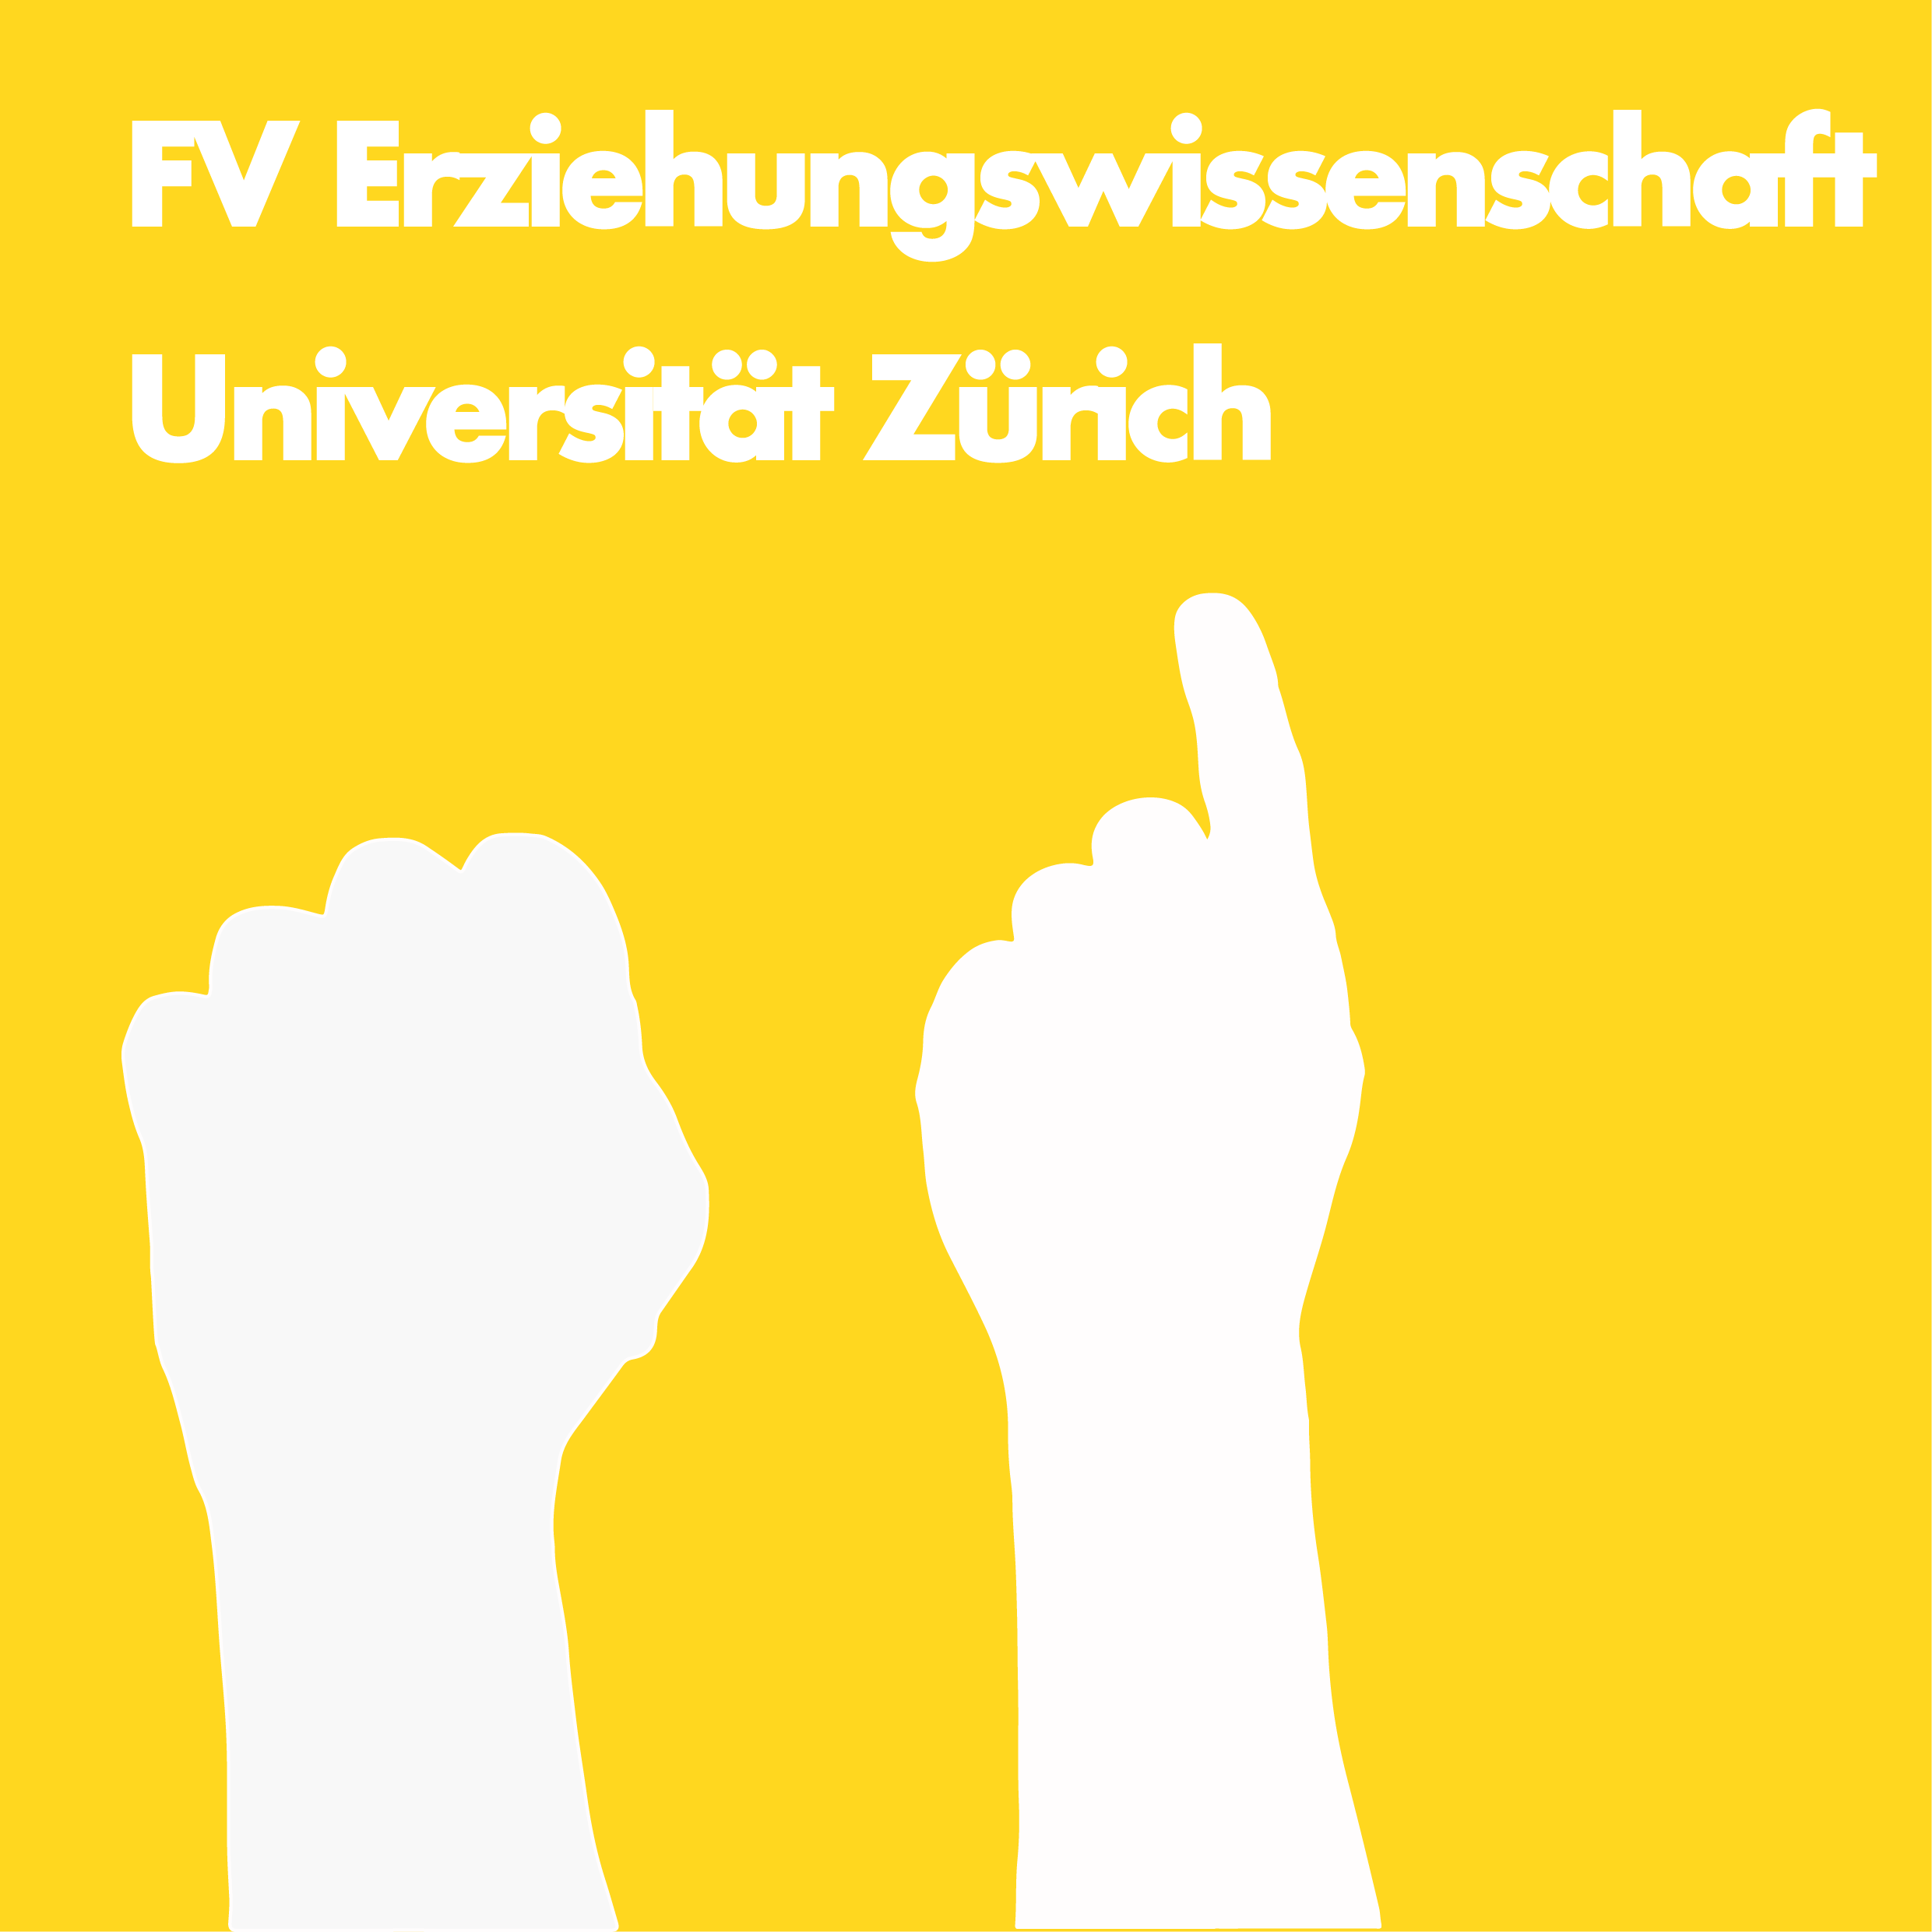 FVEW Logo